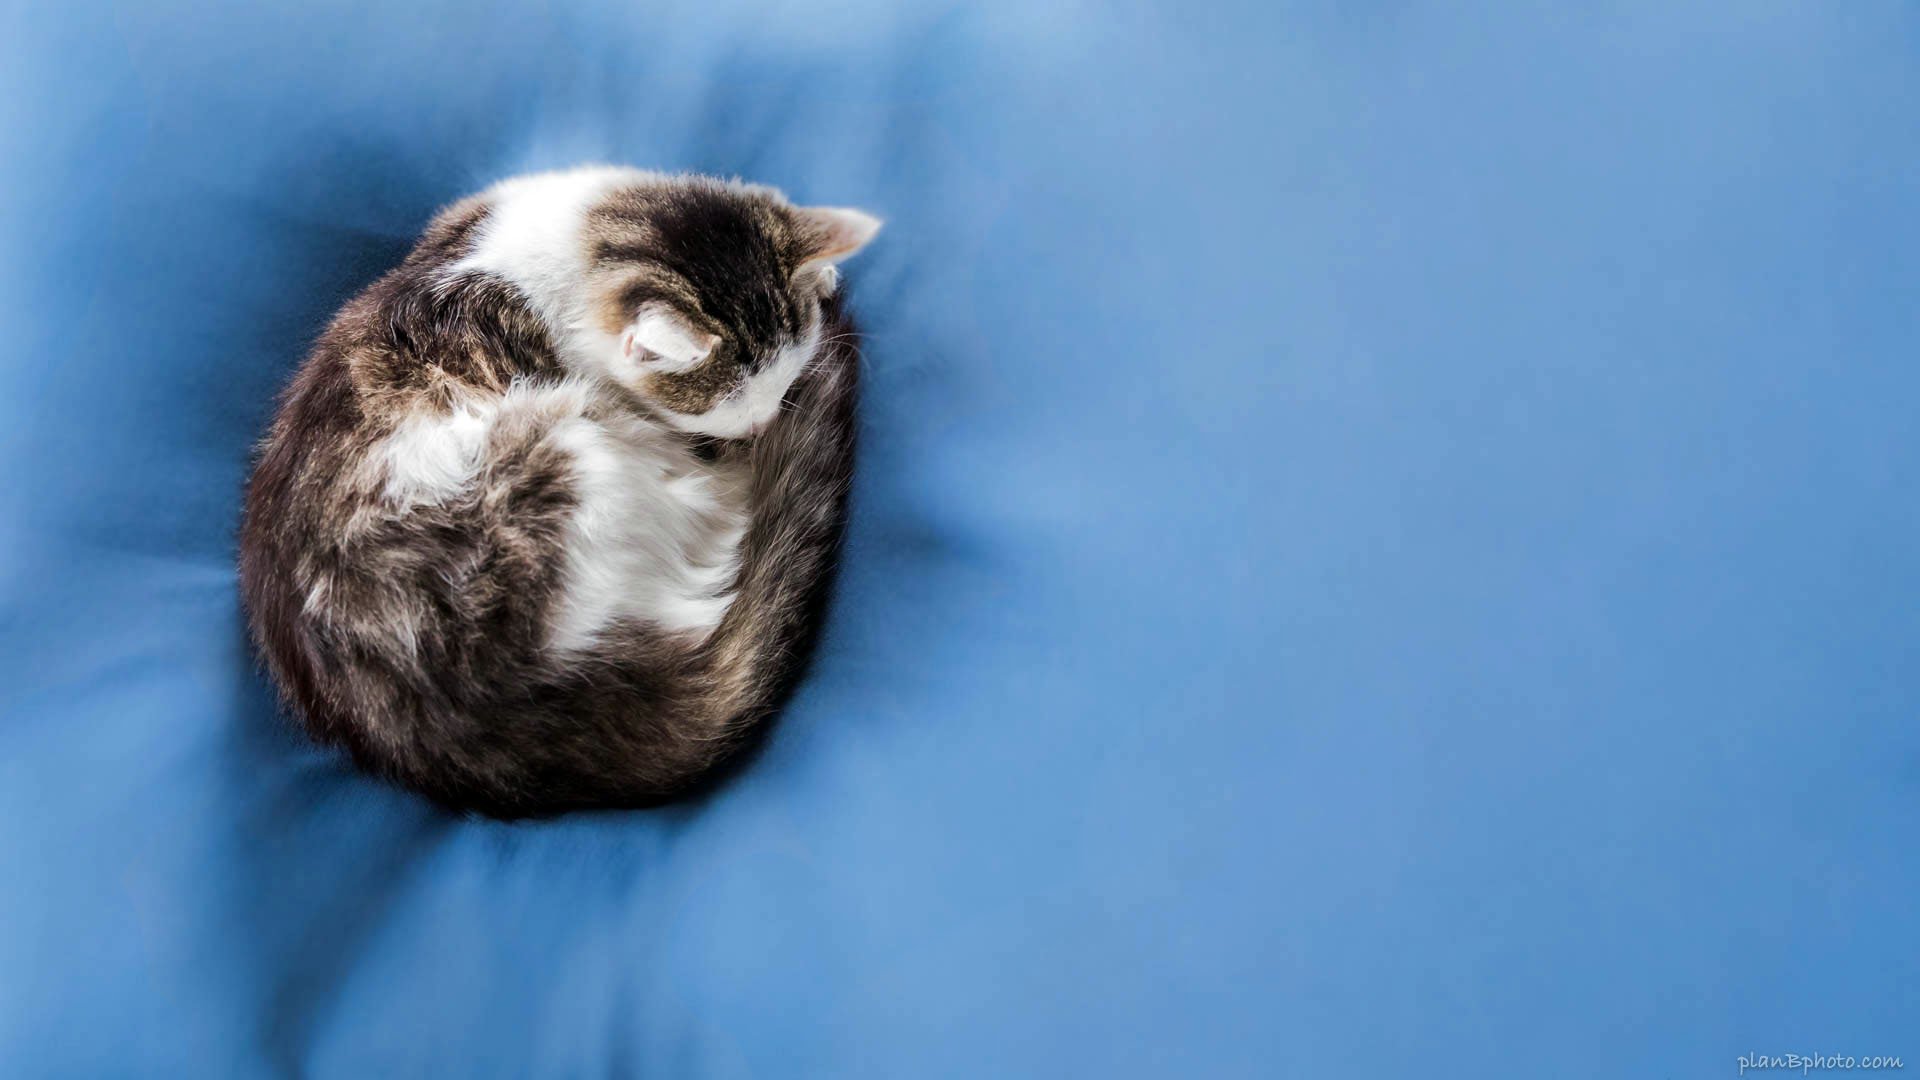 Cute cat sleeping on soft blue blanket